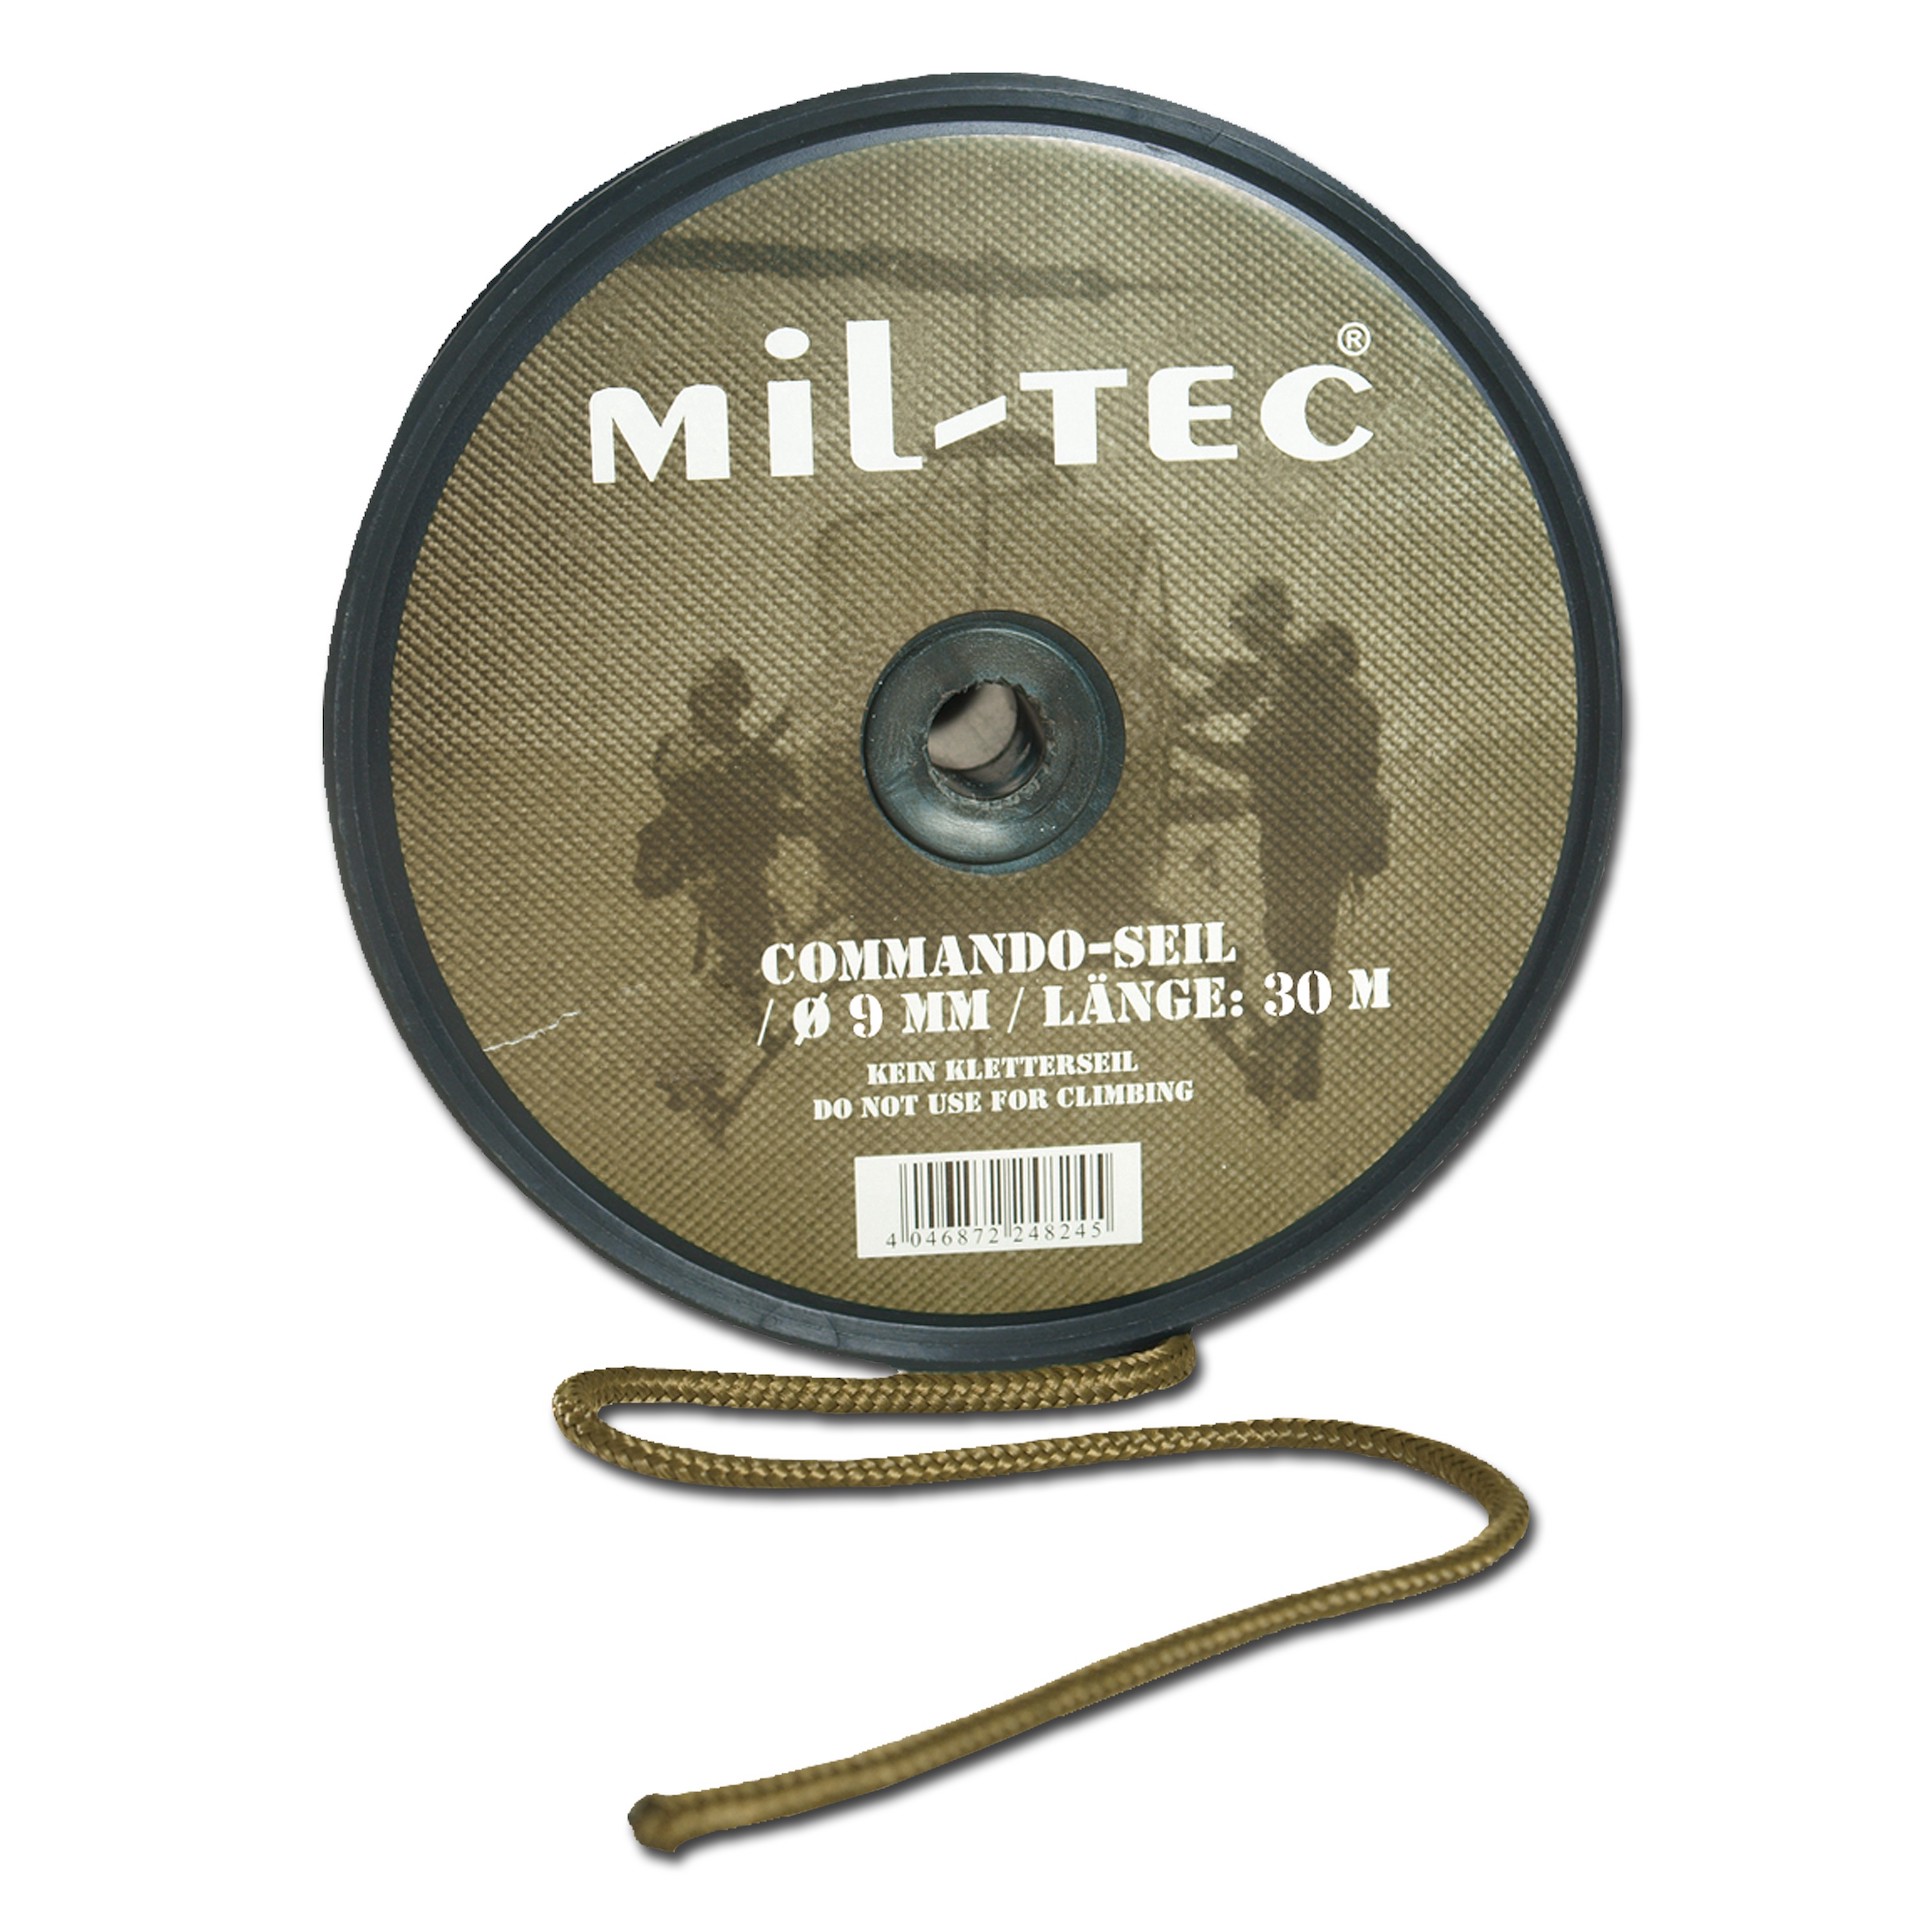 MILTEC Commando-Seil Rolle 9 mm x 30 m